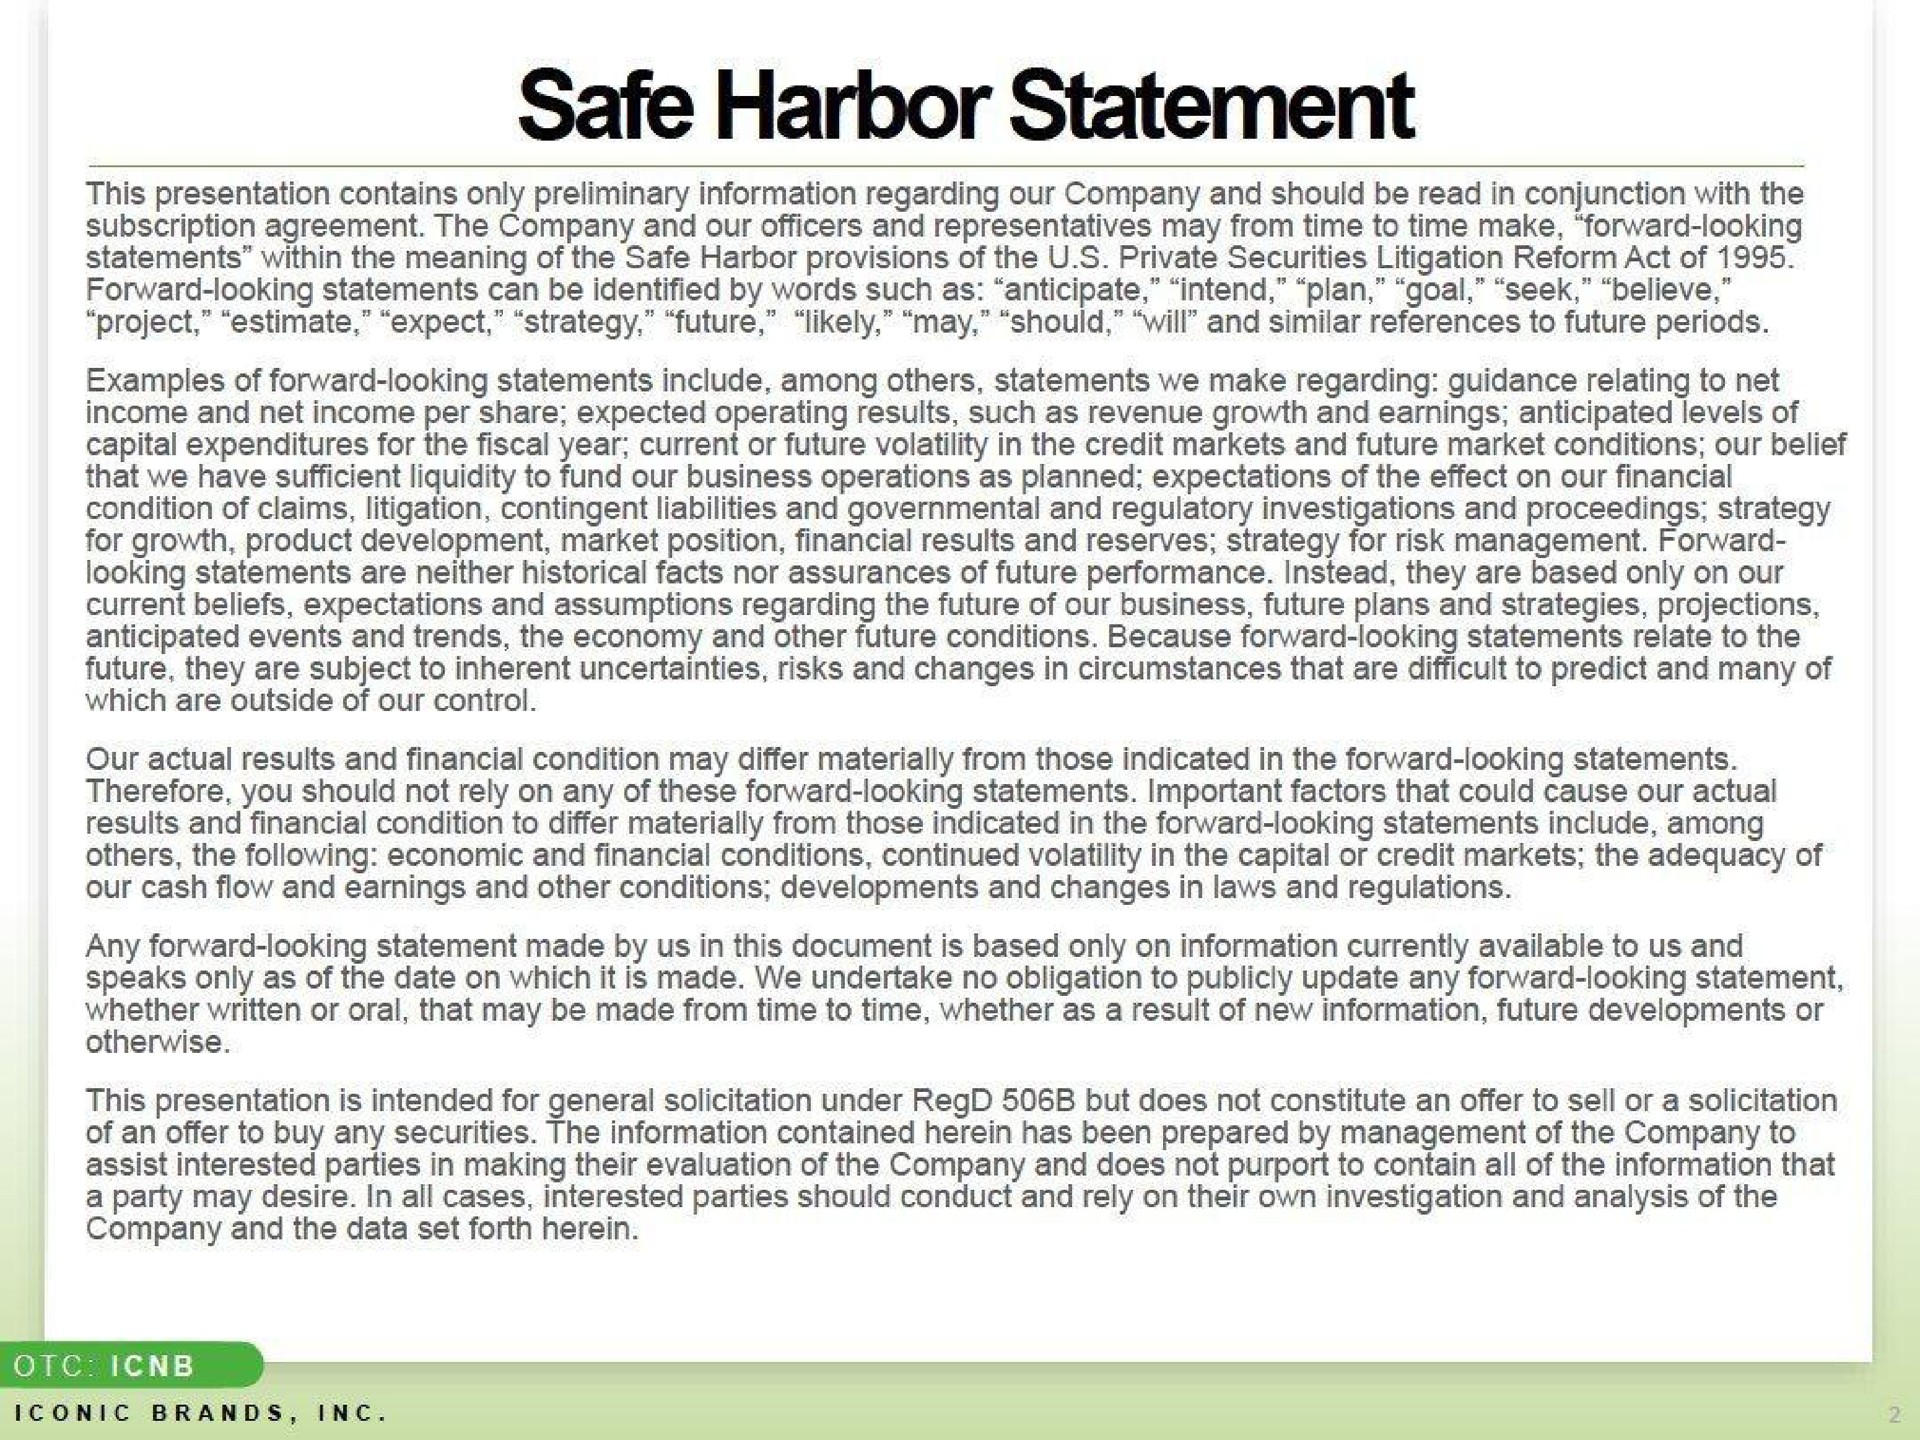 safe harbor statement | Iconic Brands